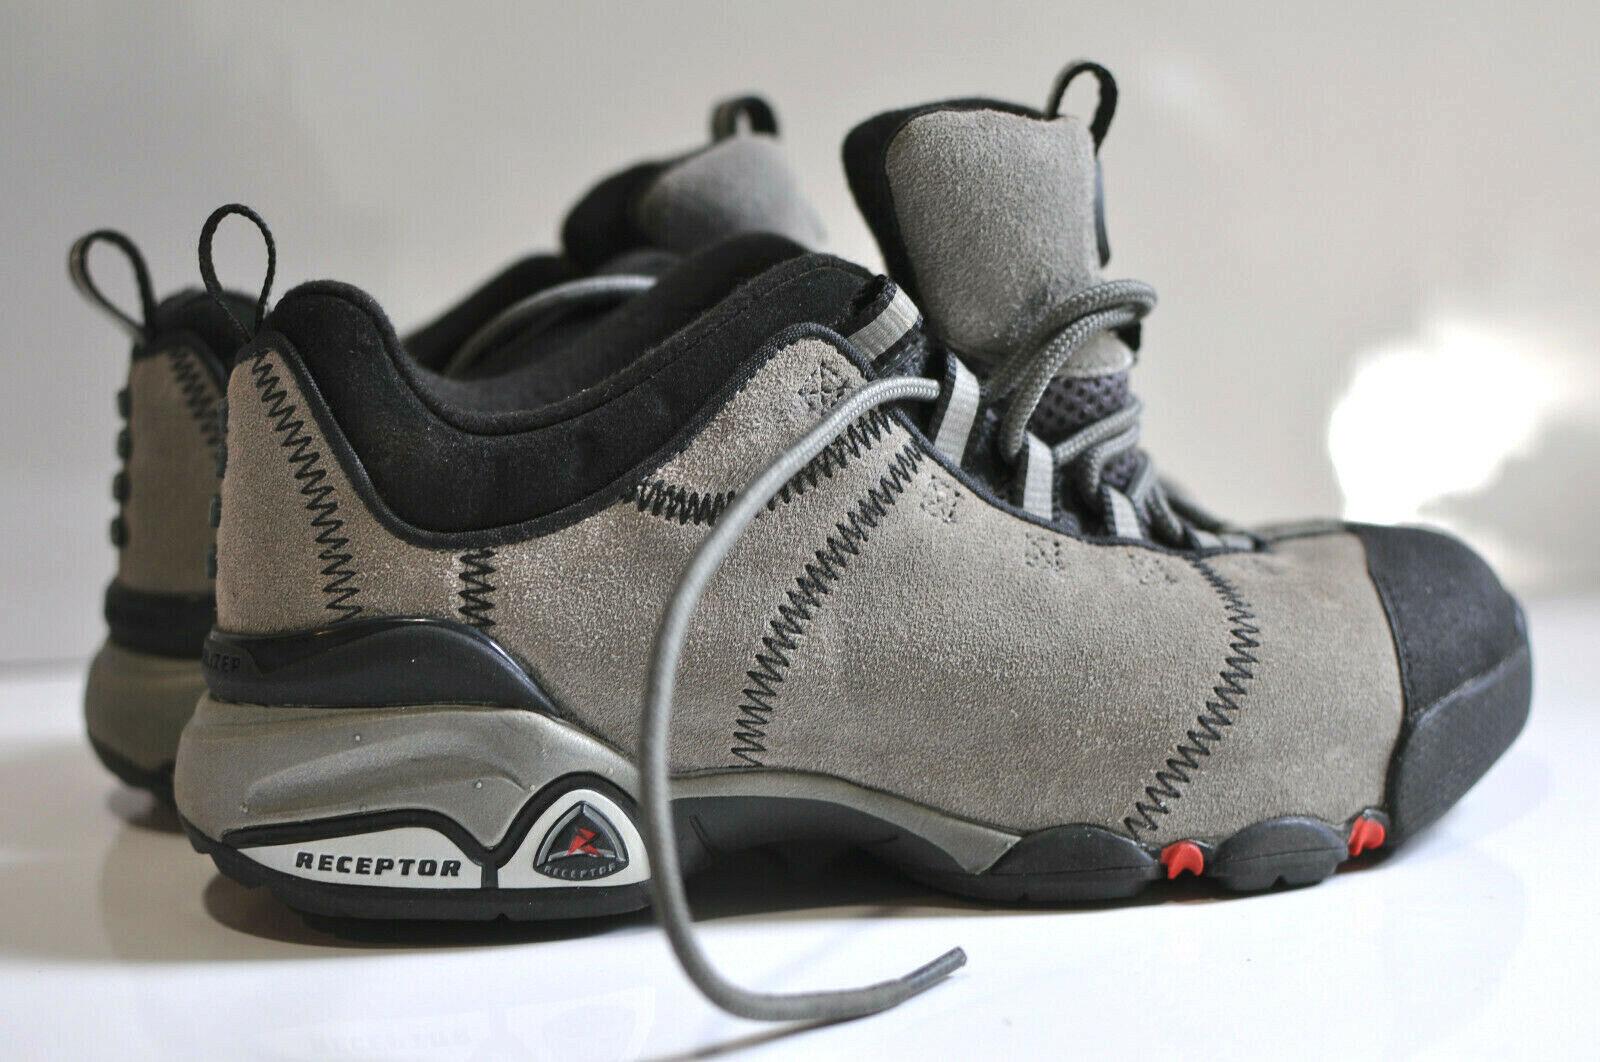 Ecco Womens Receptor grey leather trail hiking shoes size EU 37